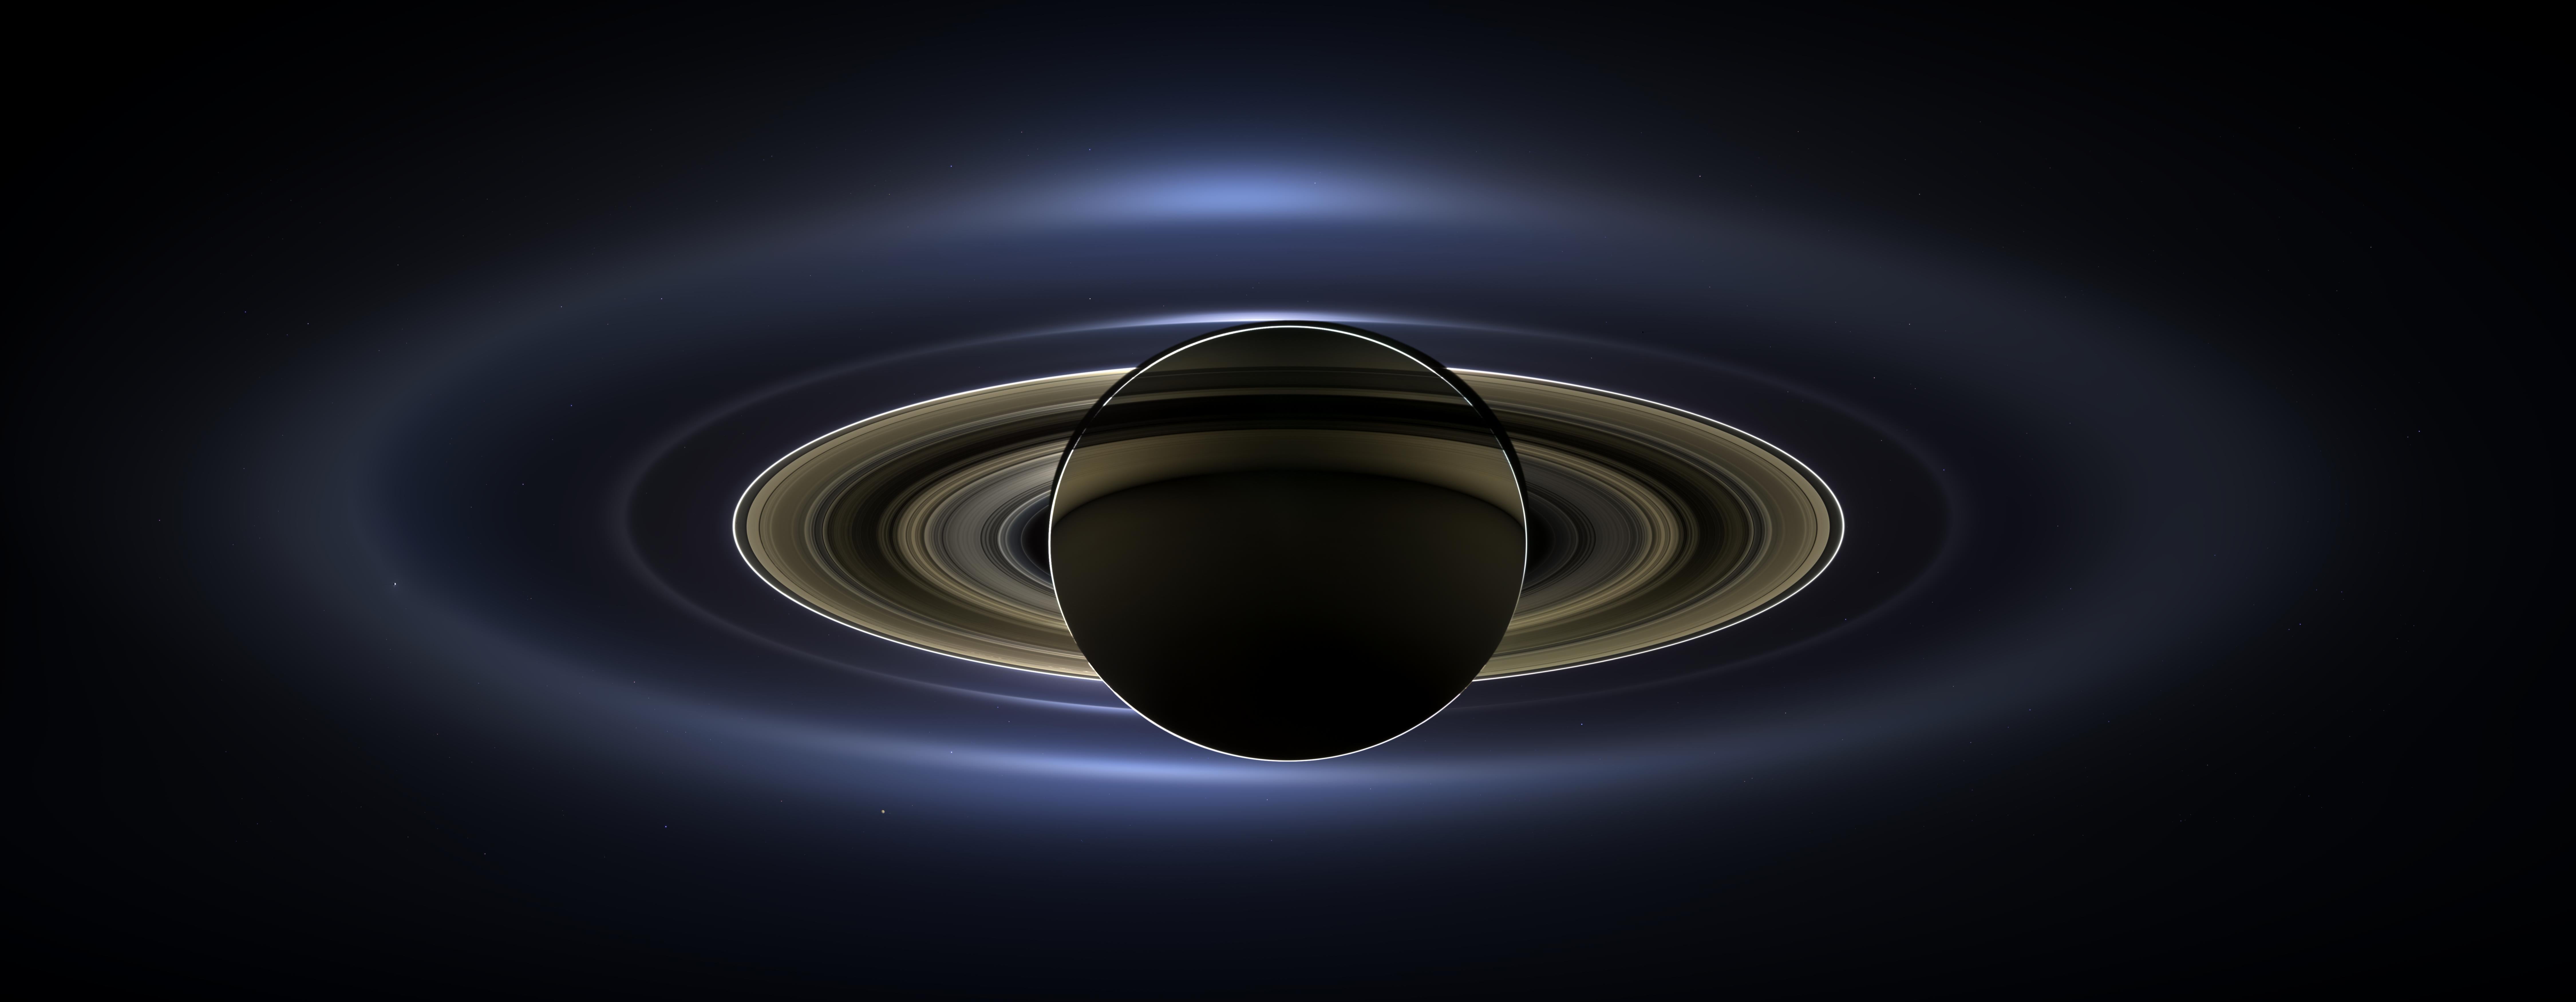 Image: NASA/JPL-Caltech/SSI